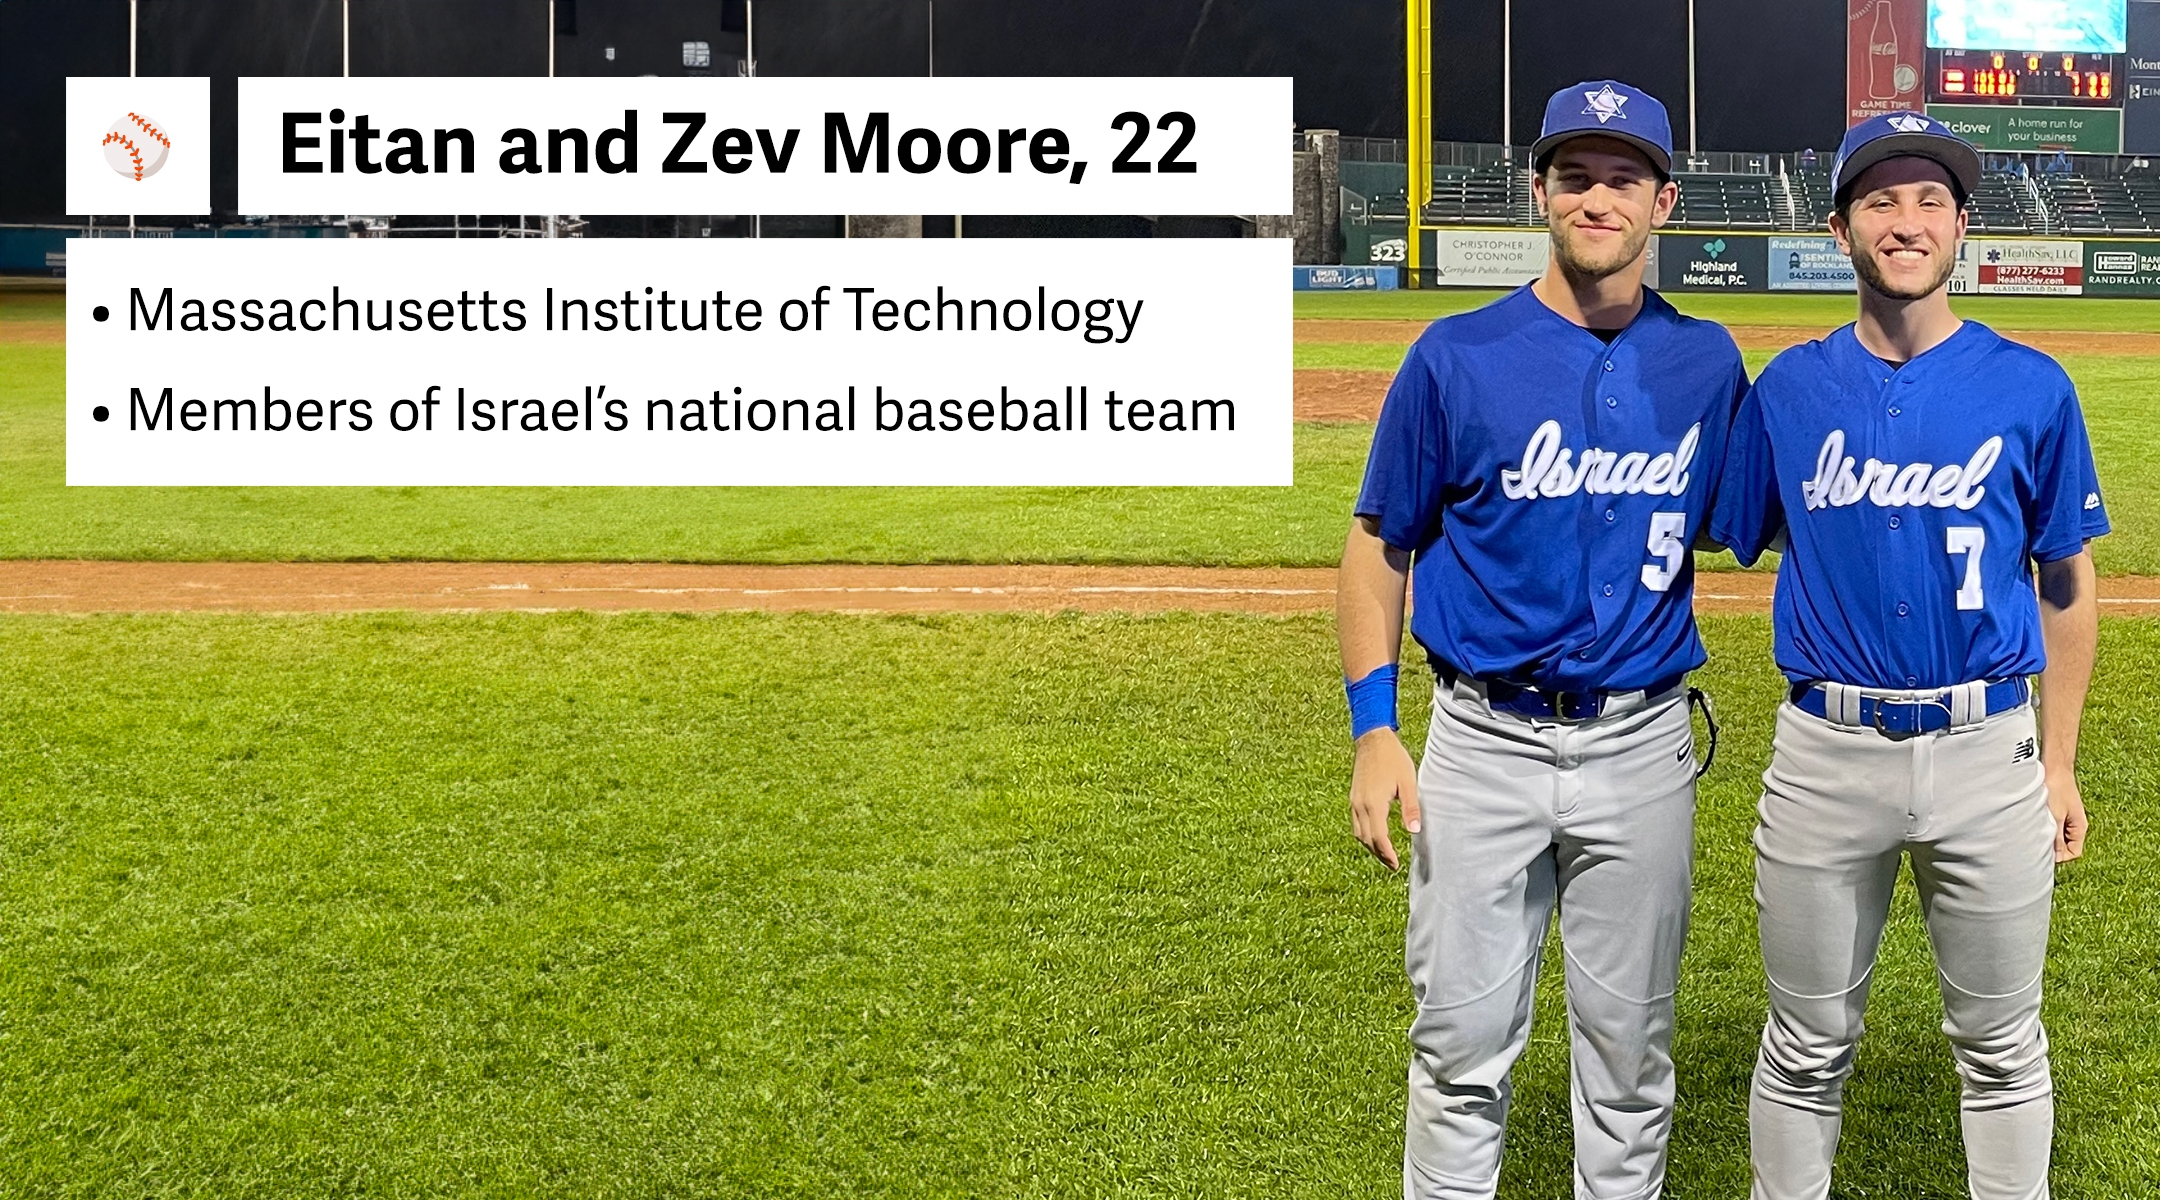 Eitan and Zev Moore